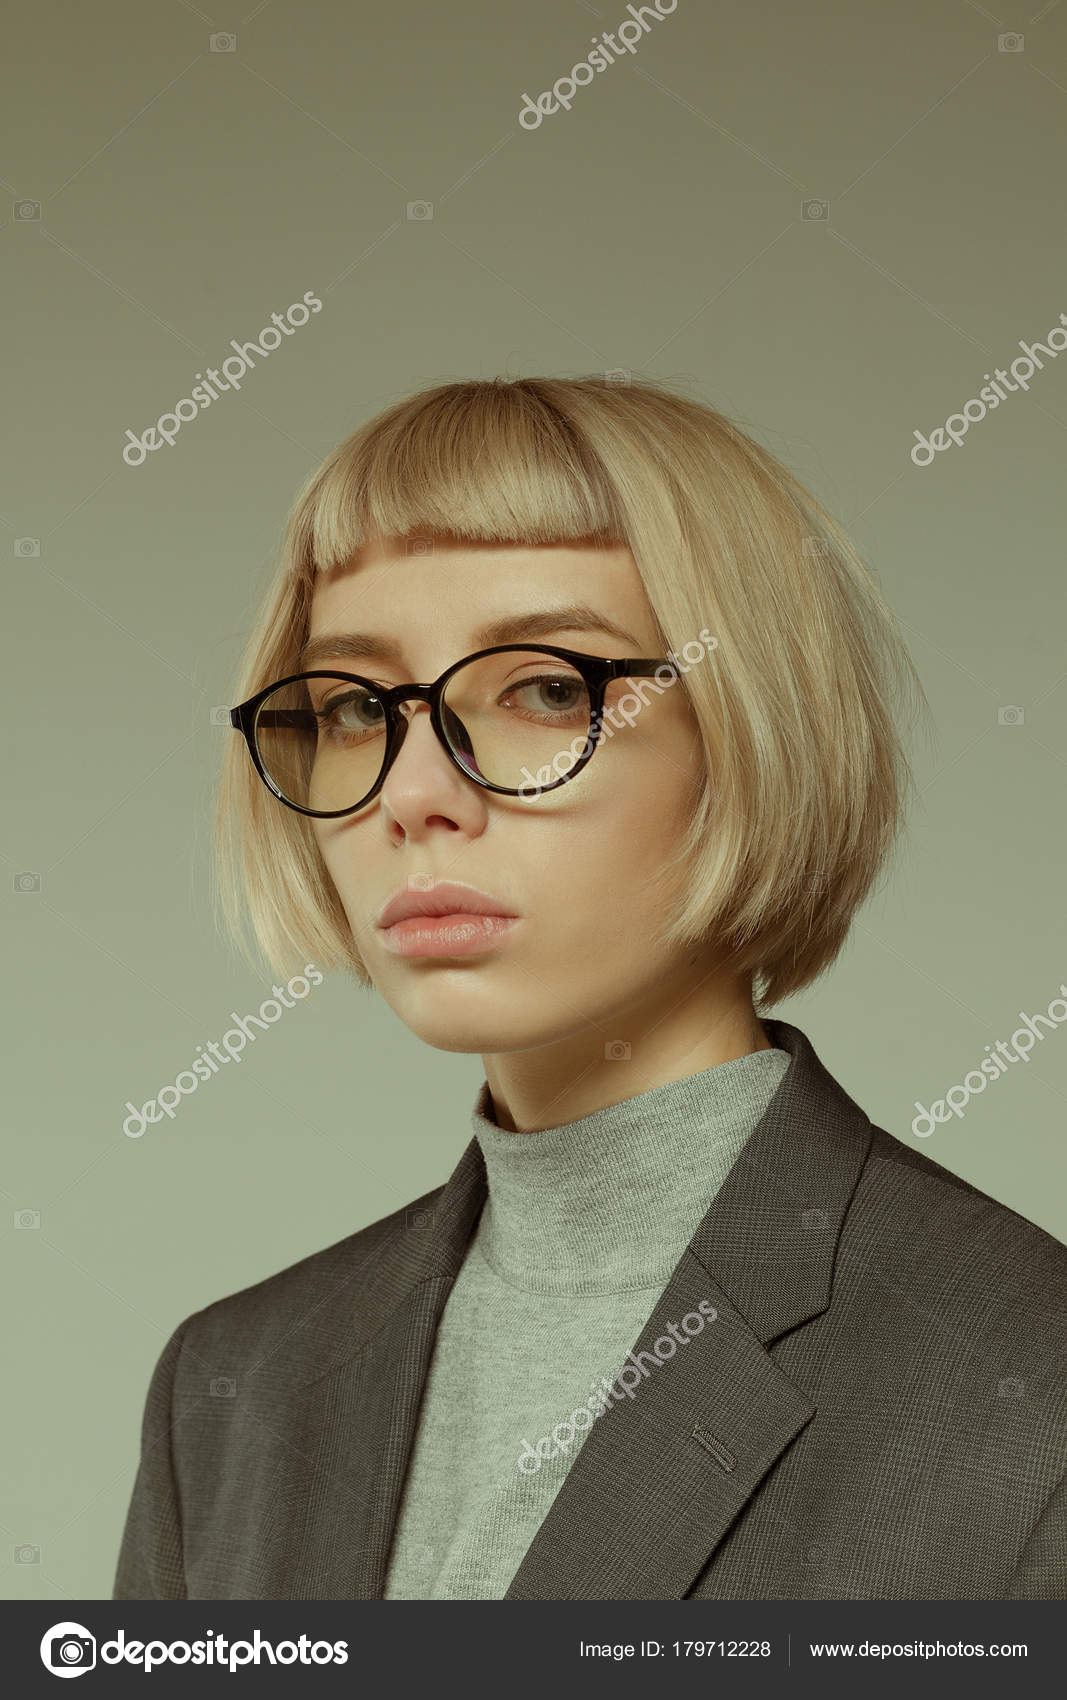 https://st3.depositphotos.com/9149834/17971/i/1600/depositphotos_179712228-stock-photo-blonde-girl-short-hair-style.jpg